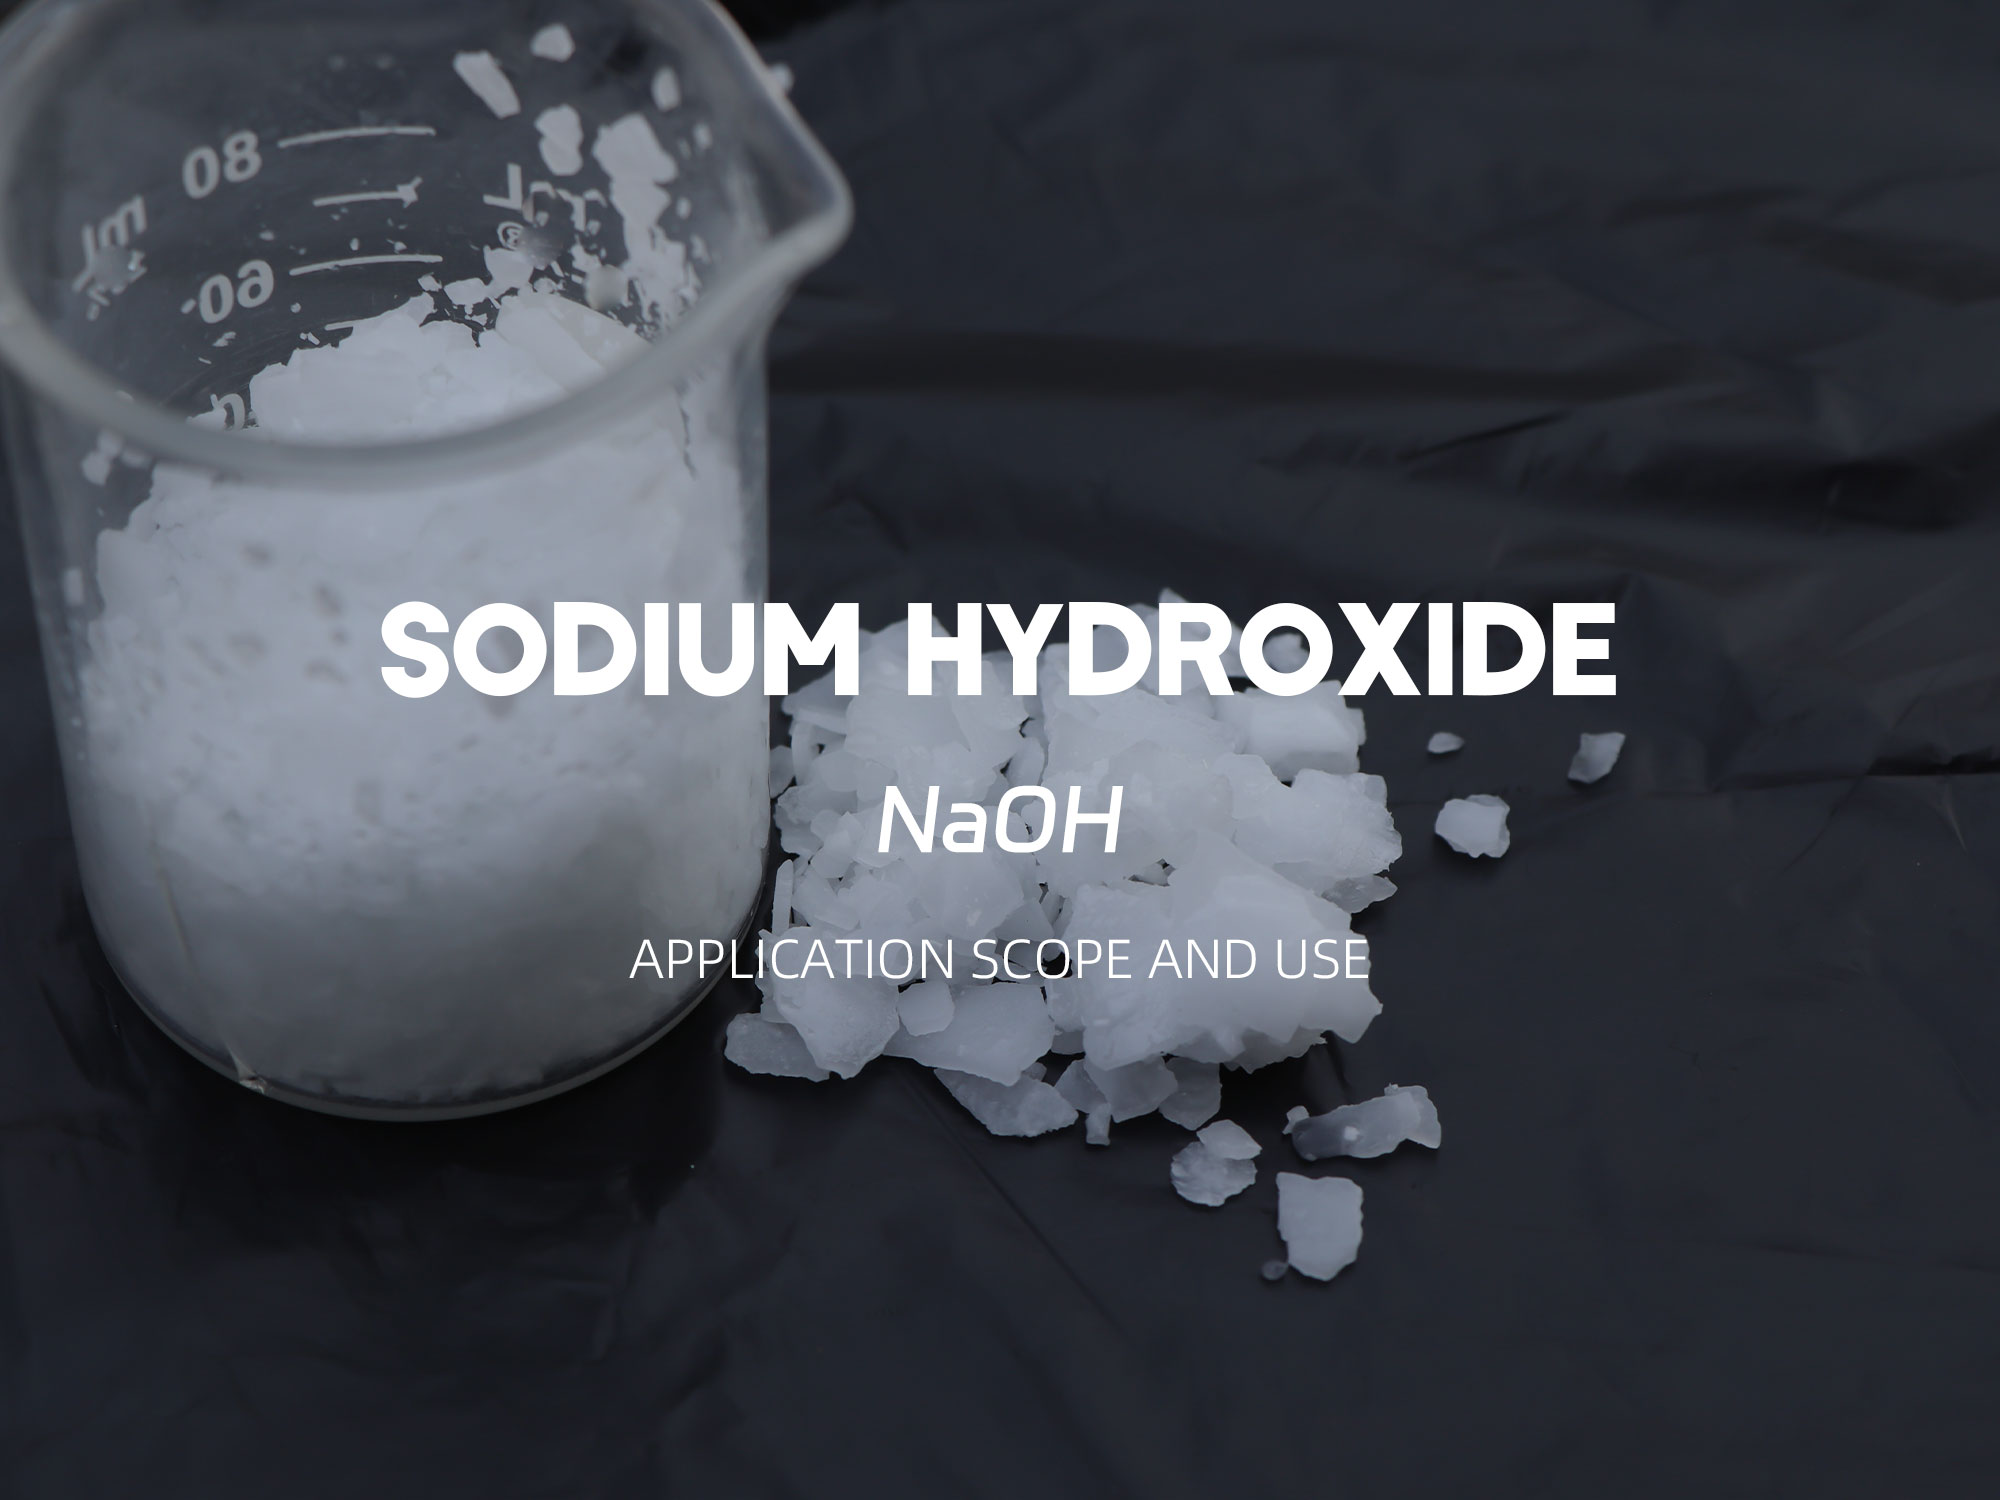 Application range and use of sodium hydroxide